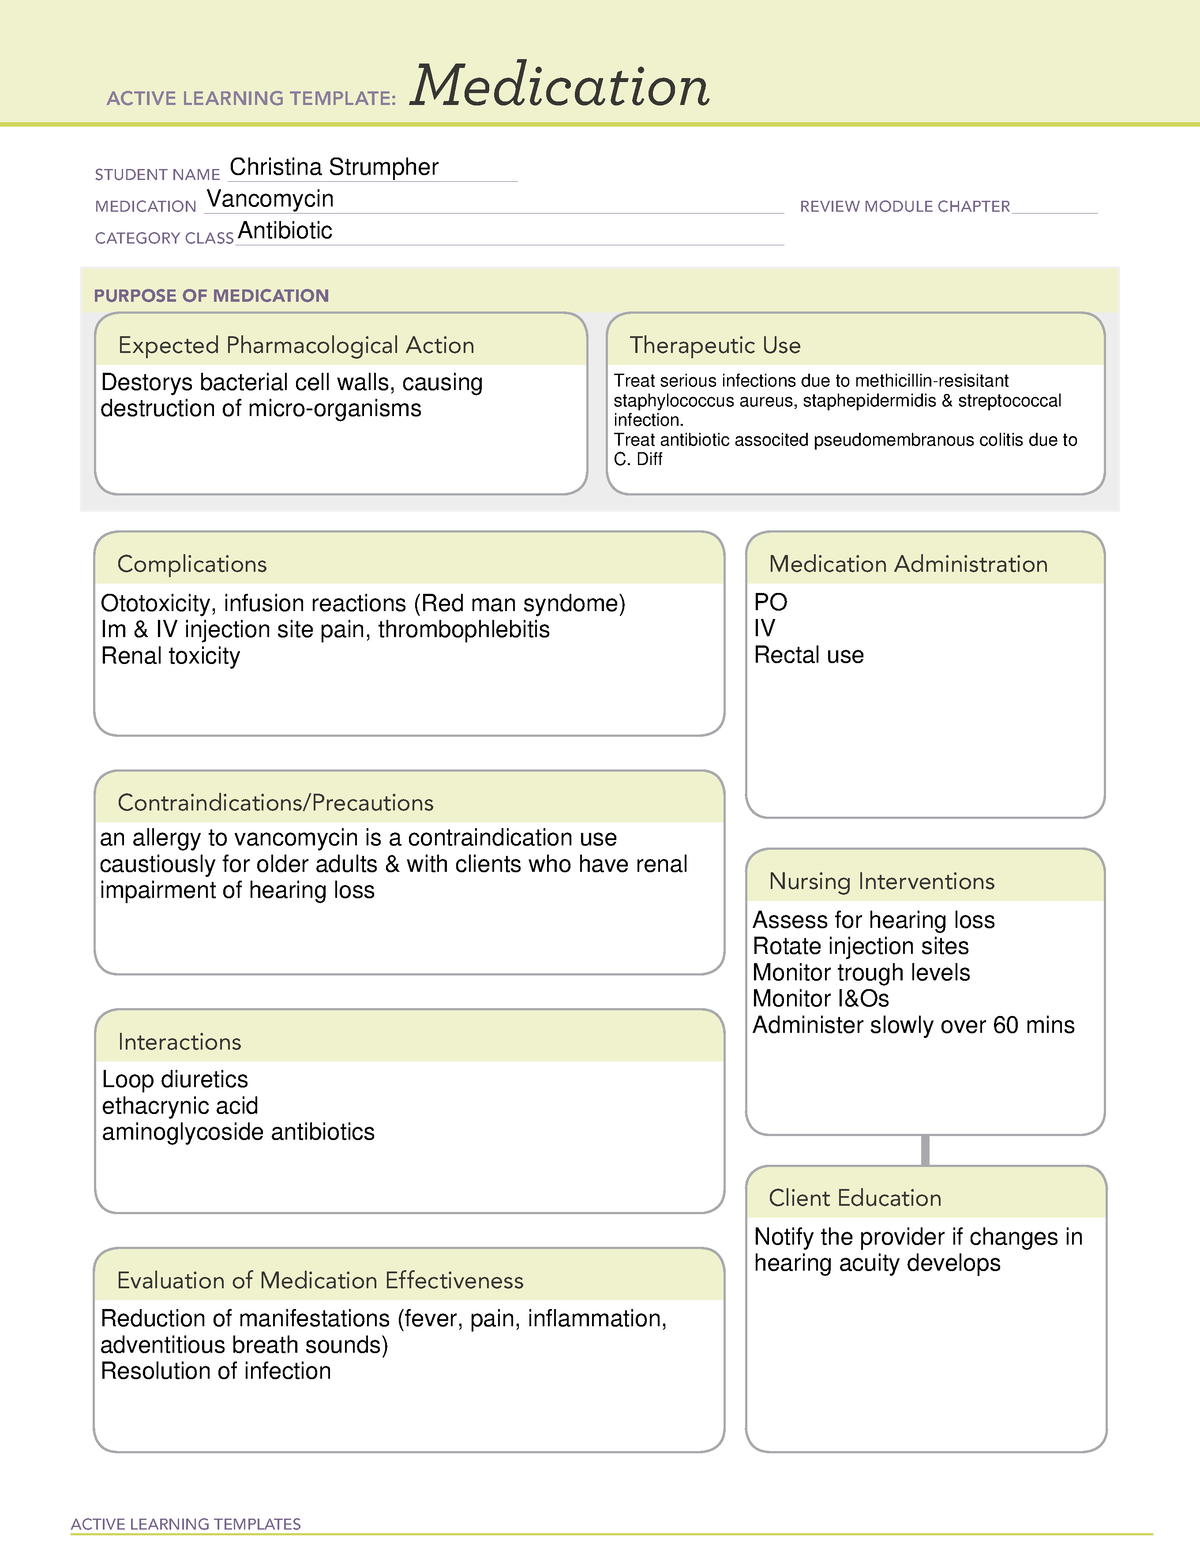 Medication sheet ACTIVE LEARNING TEMPLATES Medication